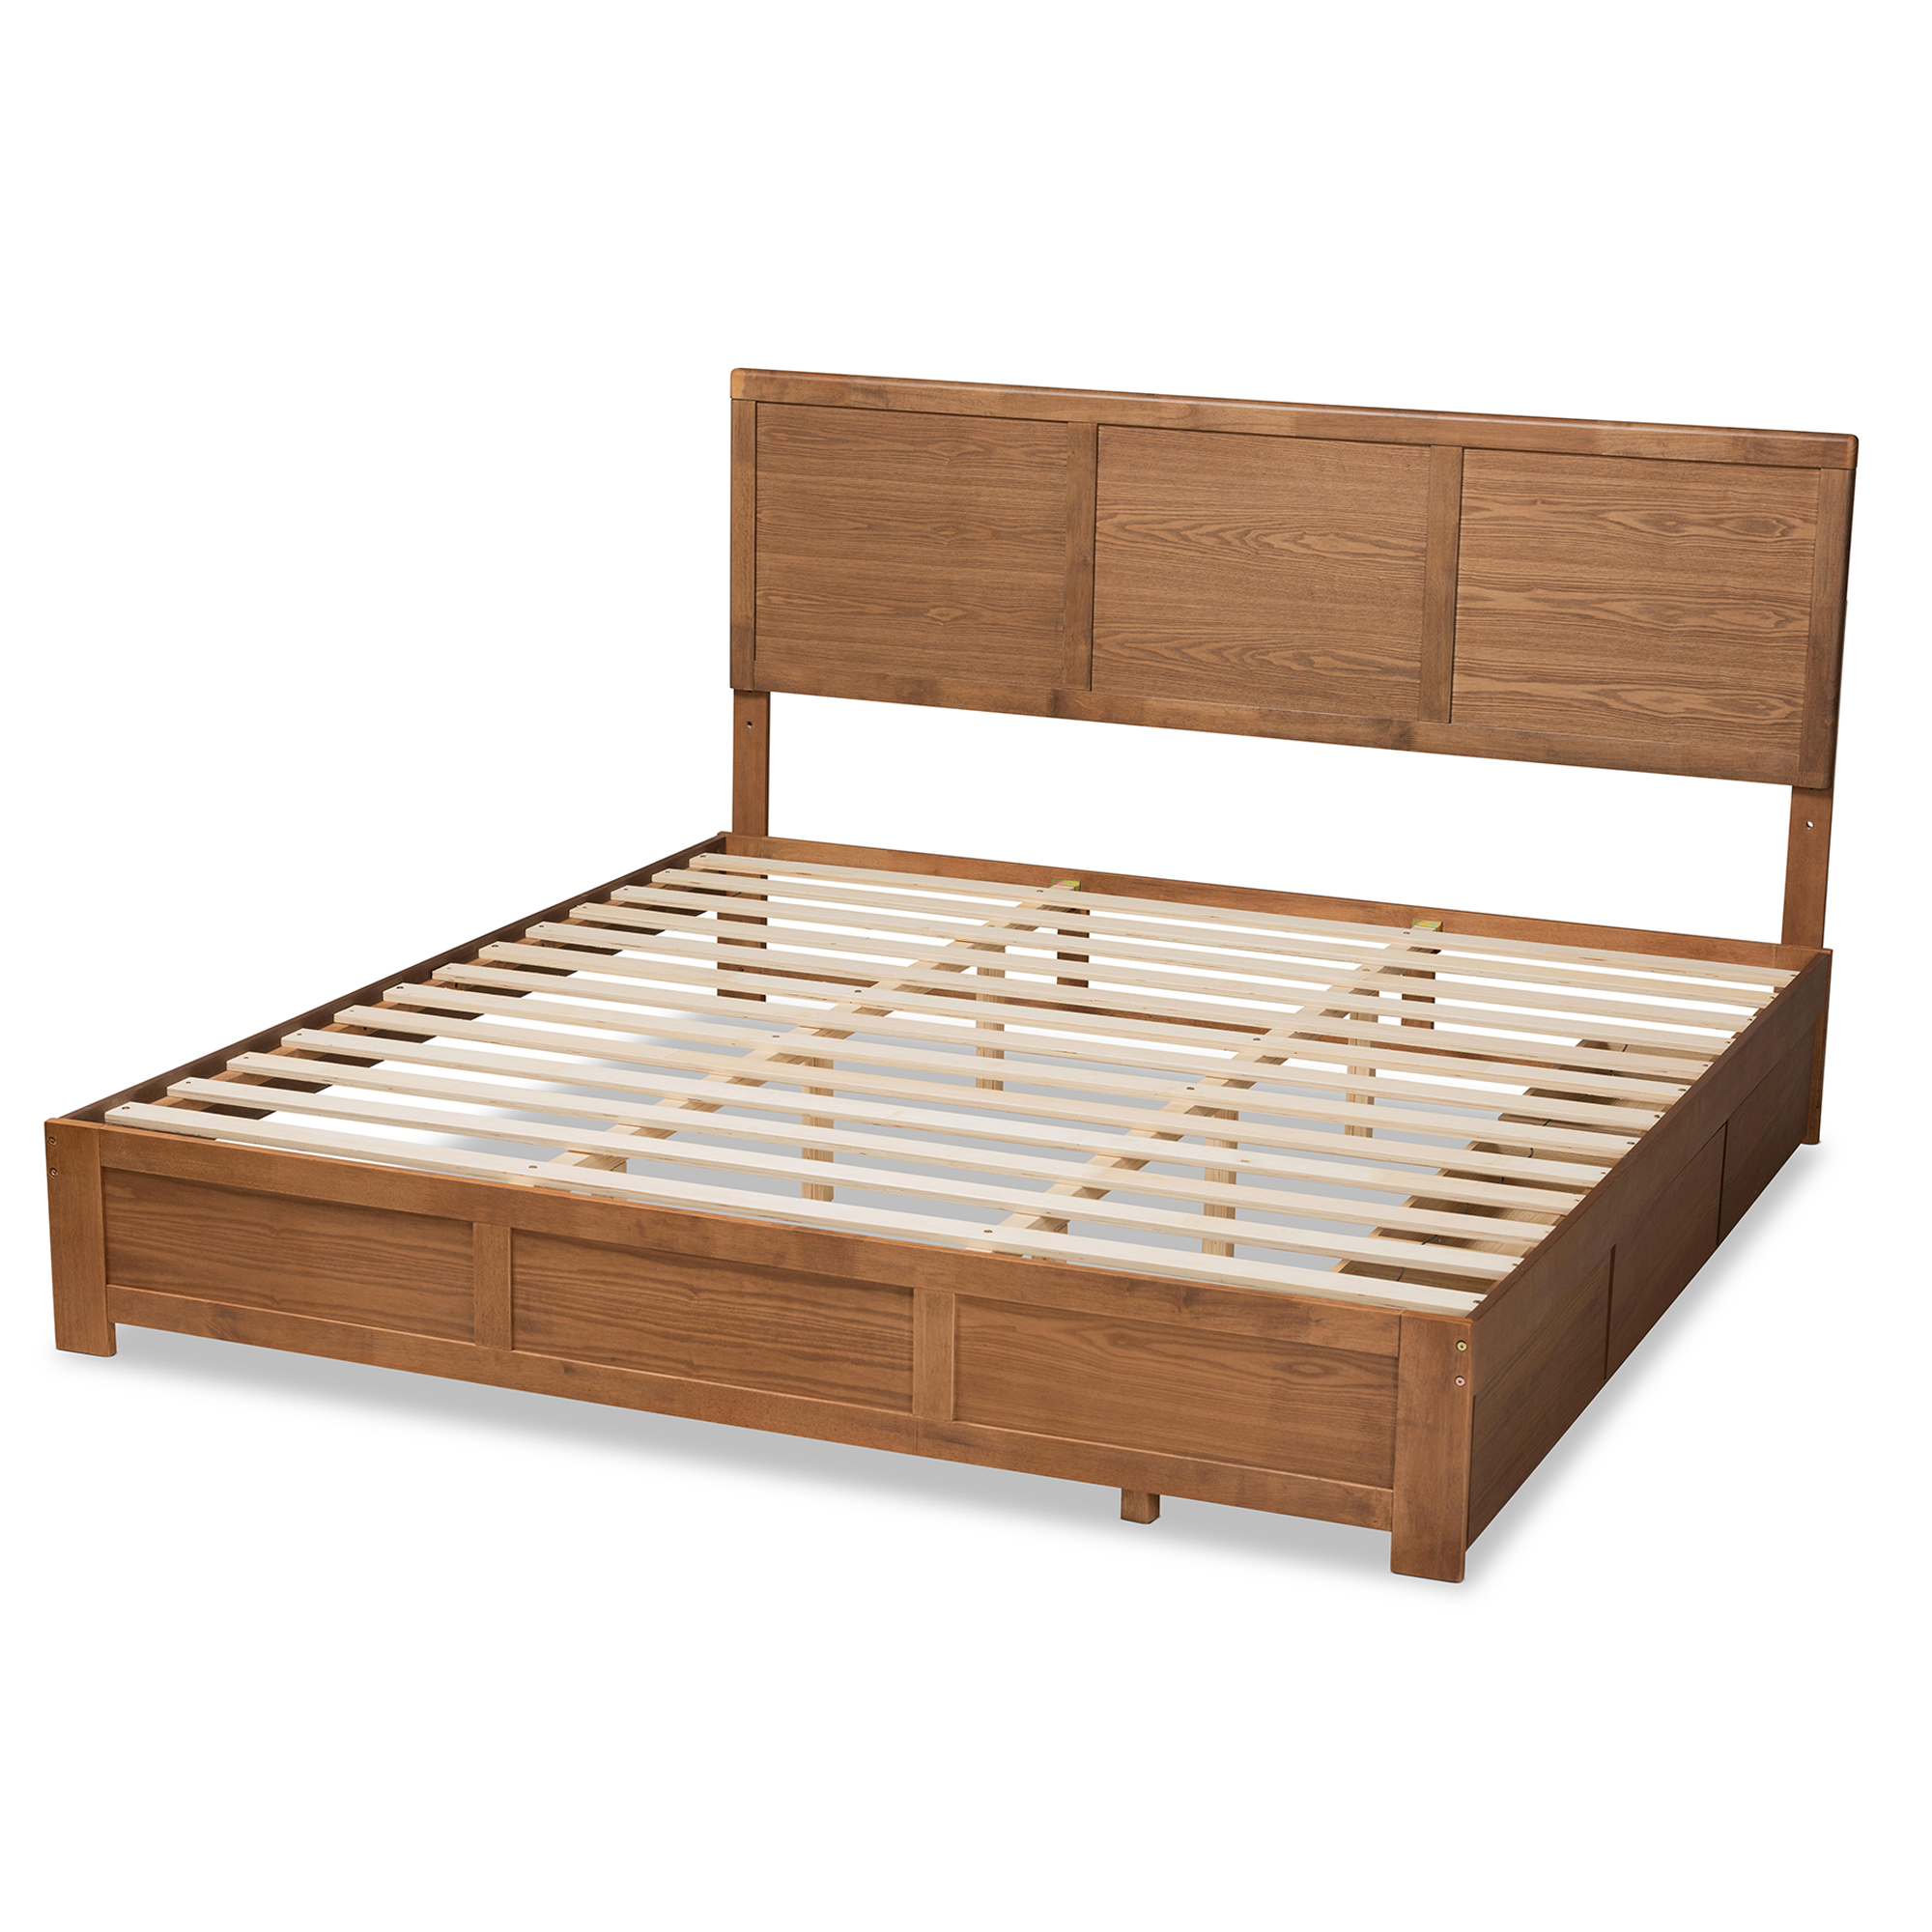 Baxton Studio Aras Contemporary/Modern Wood Storage Platform Bed, King, Ash Walnut - image 5 of 13